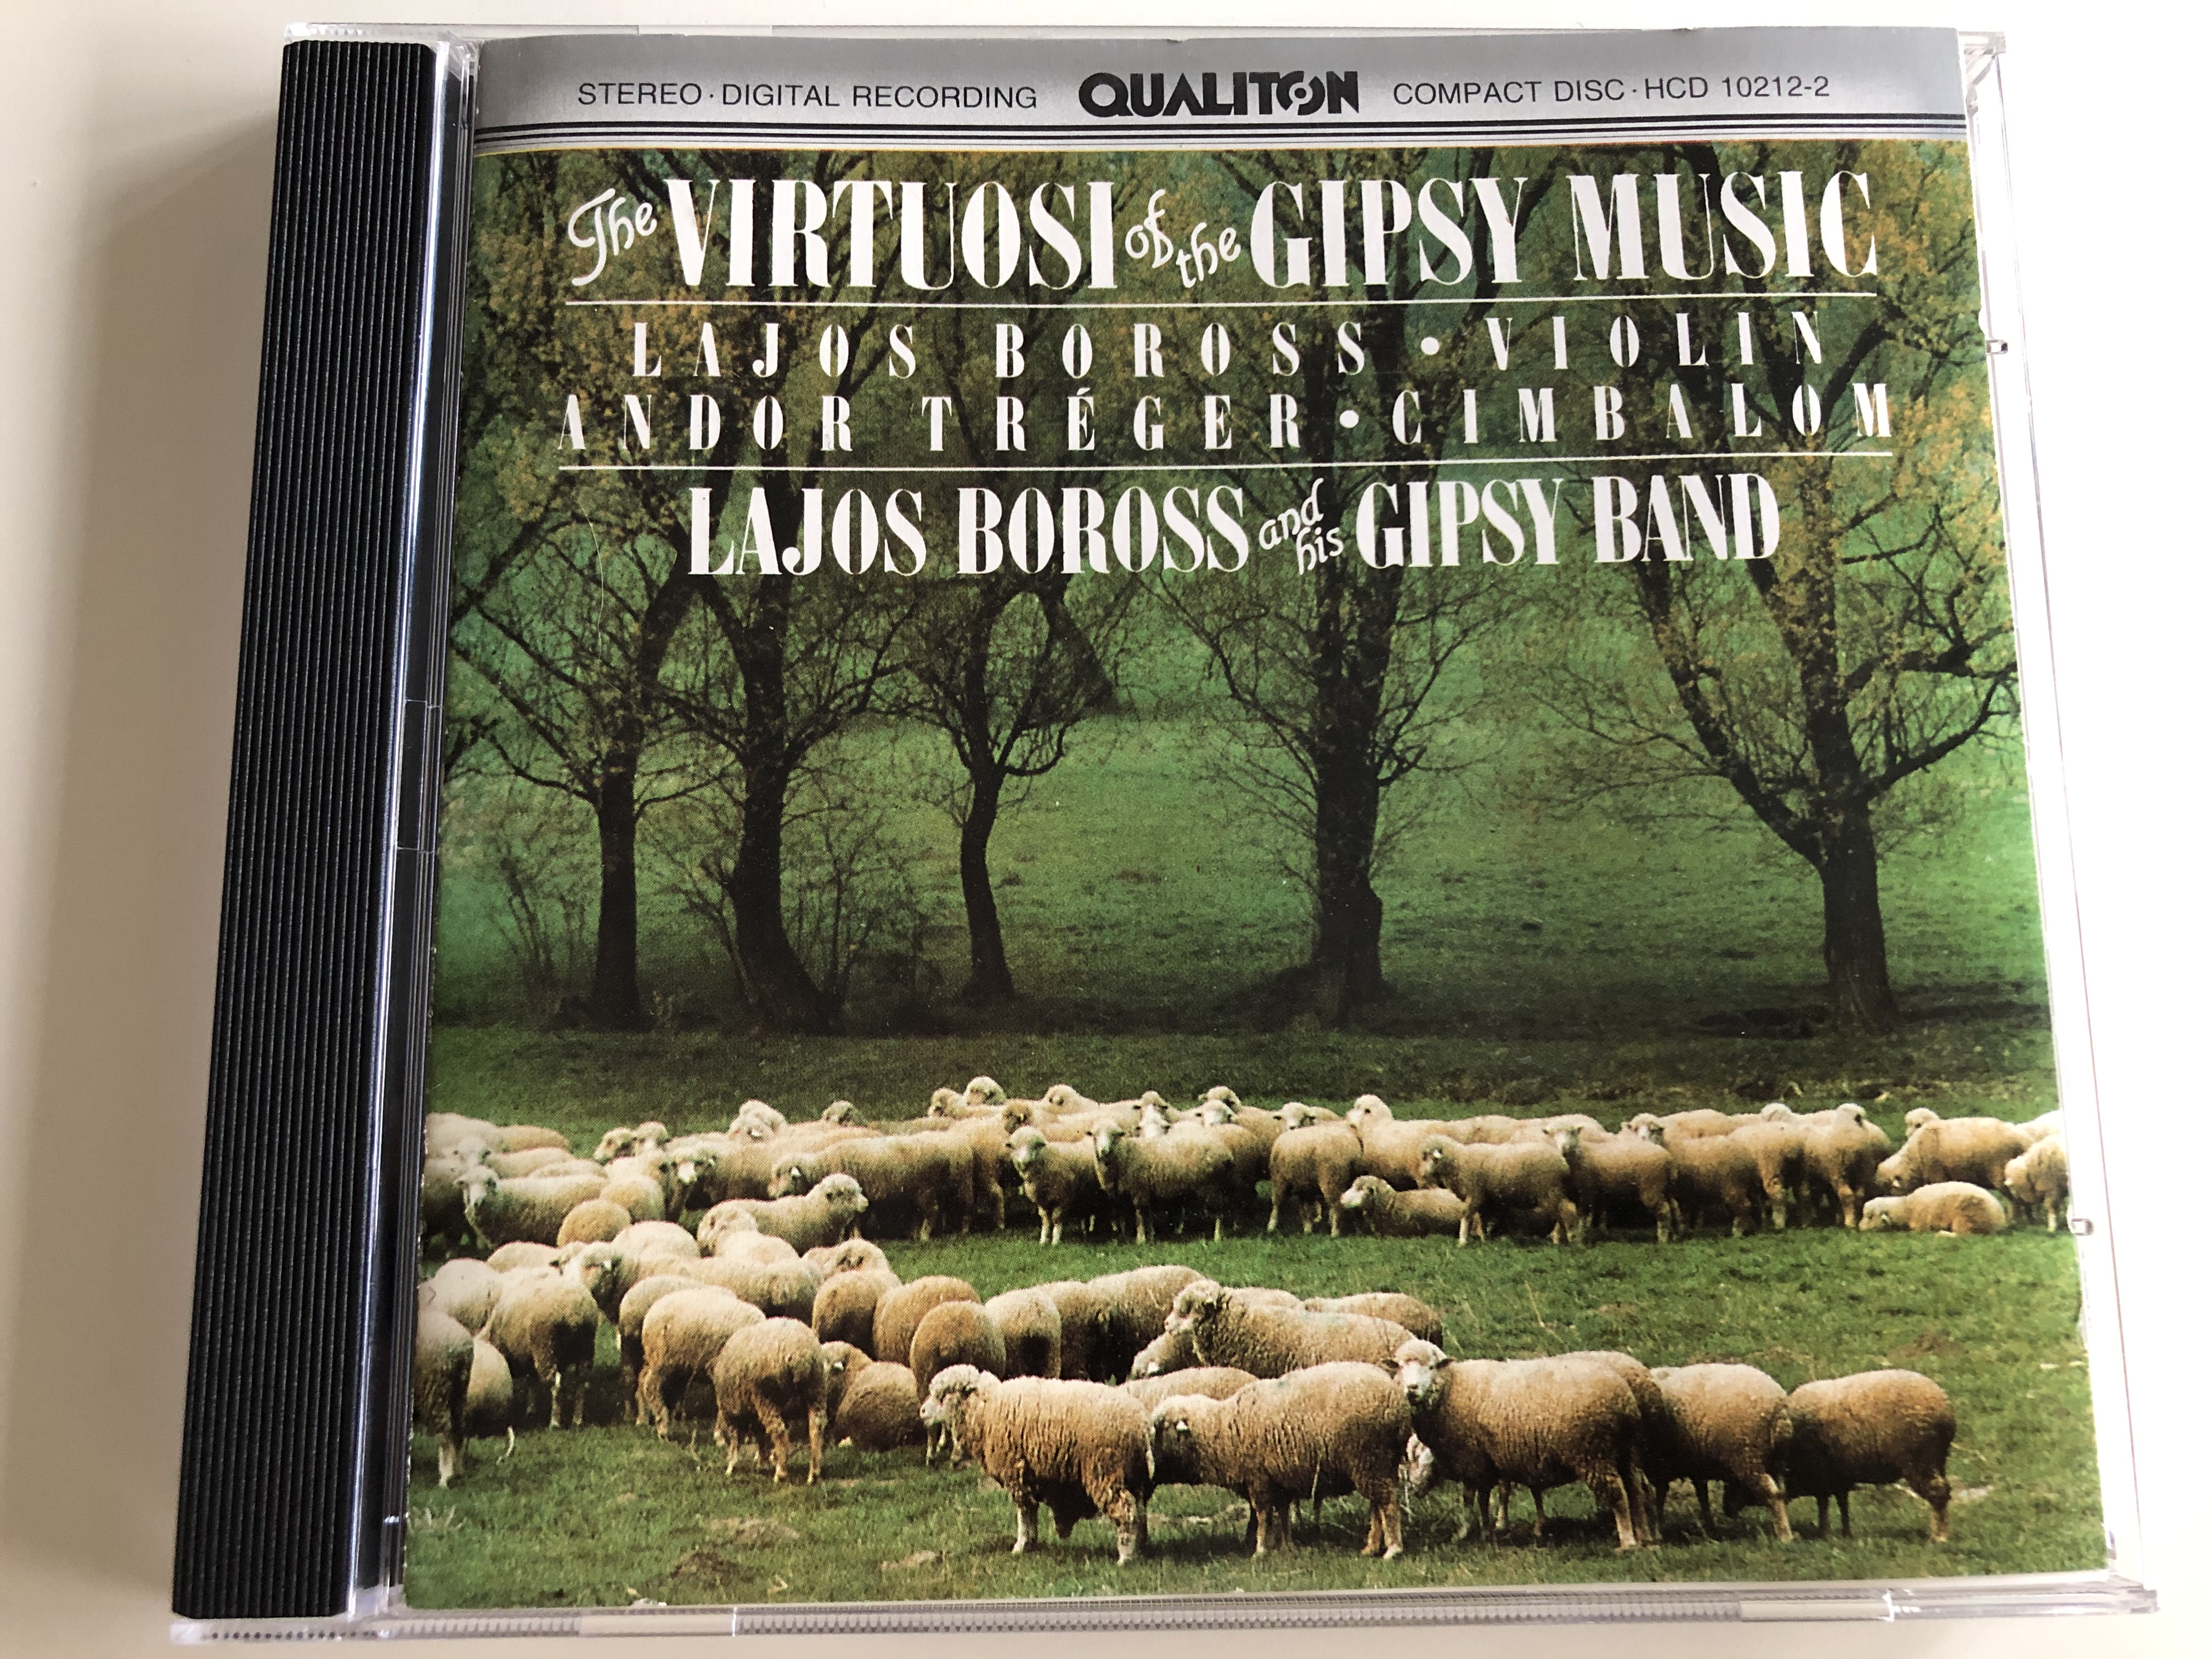 lajos-boross-and-his-gipsy-band-audio-cd-lajos-boross-violin-andor-tr-ger-cymbalo-the-virtuosi-of-the-gipsy-music-hungarian-songs-folk-songs-and-arrangements-qualiton-hcd-10212-2-1-.jpg